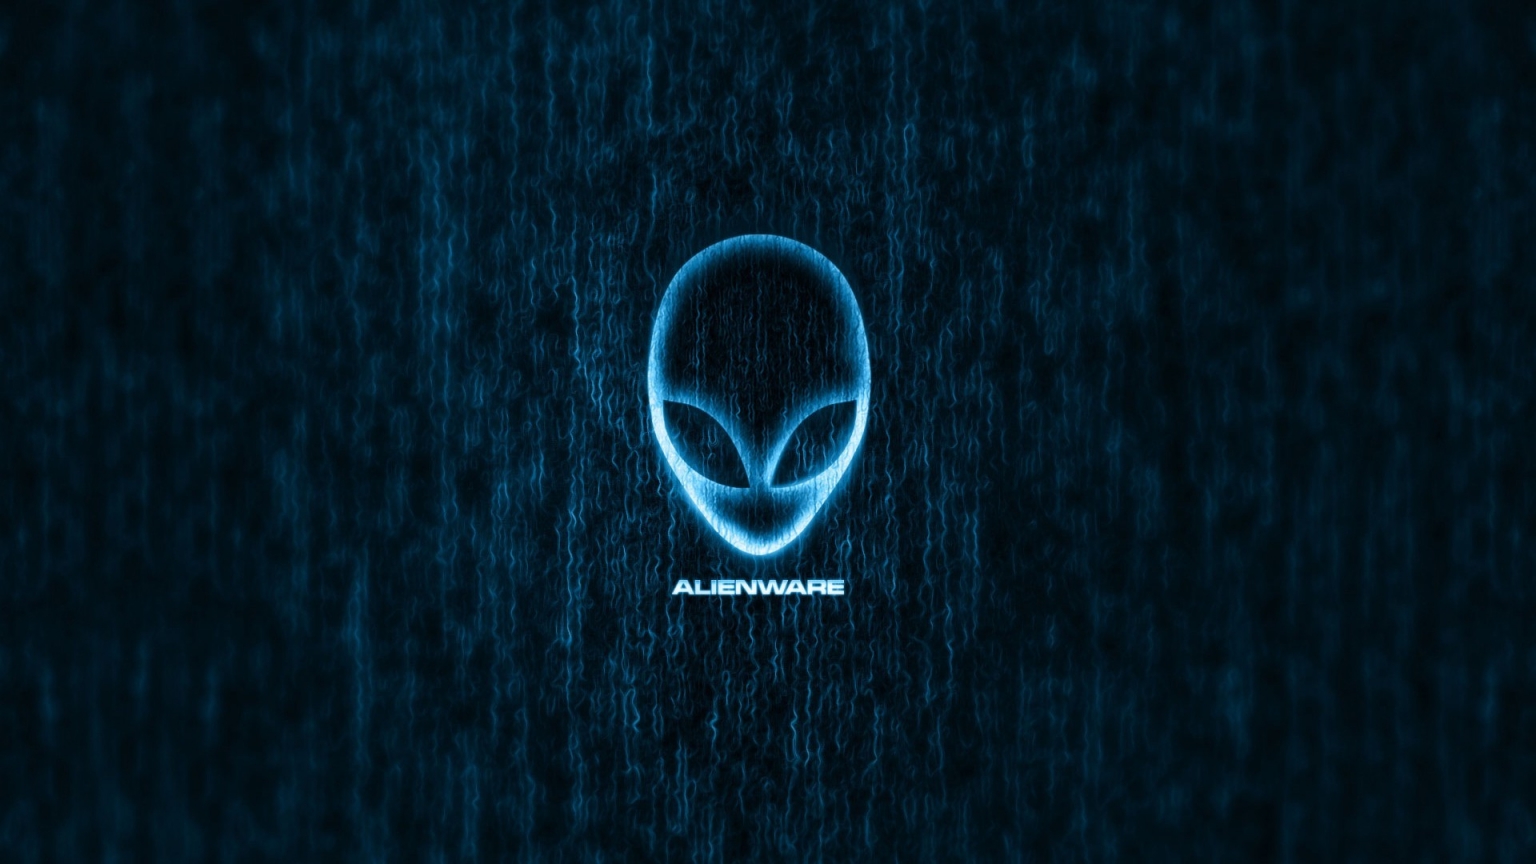 Alienware Company Logo for 1536 x 864 HDTV resolution